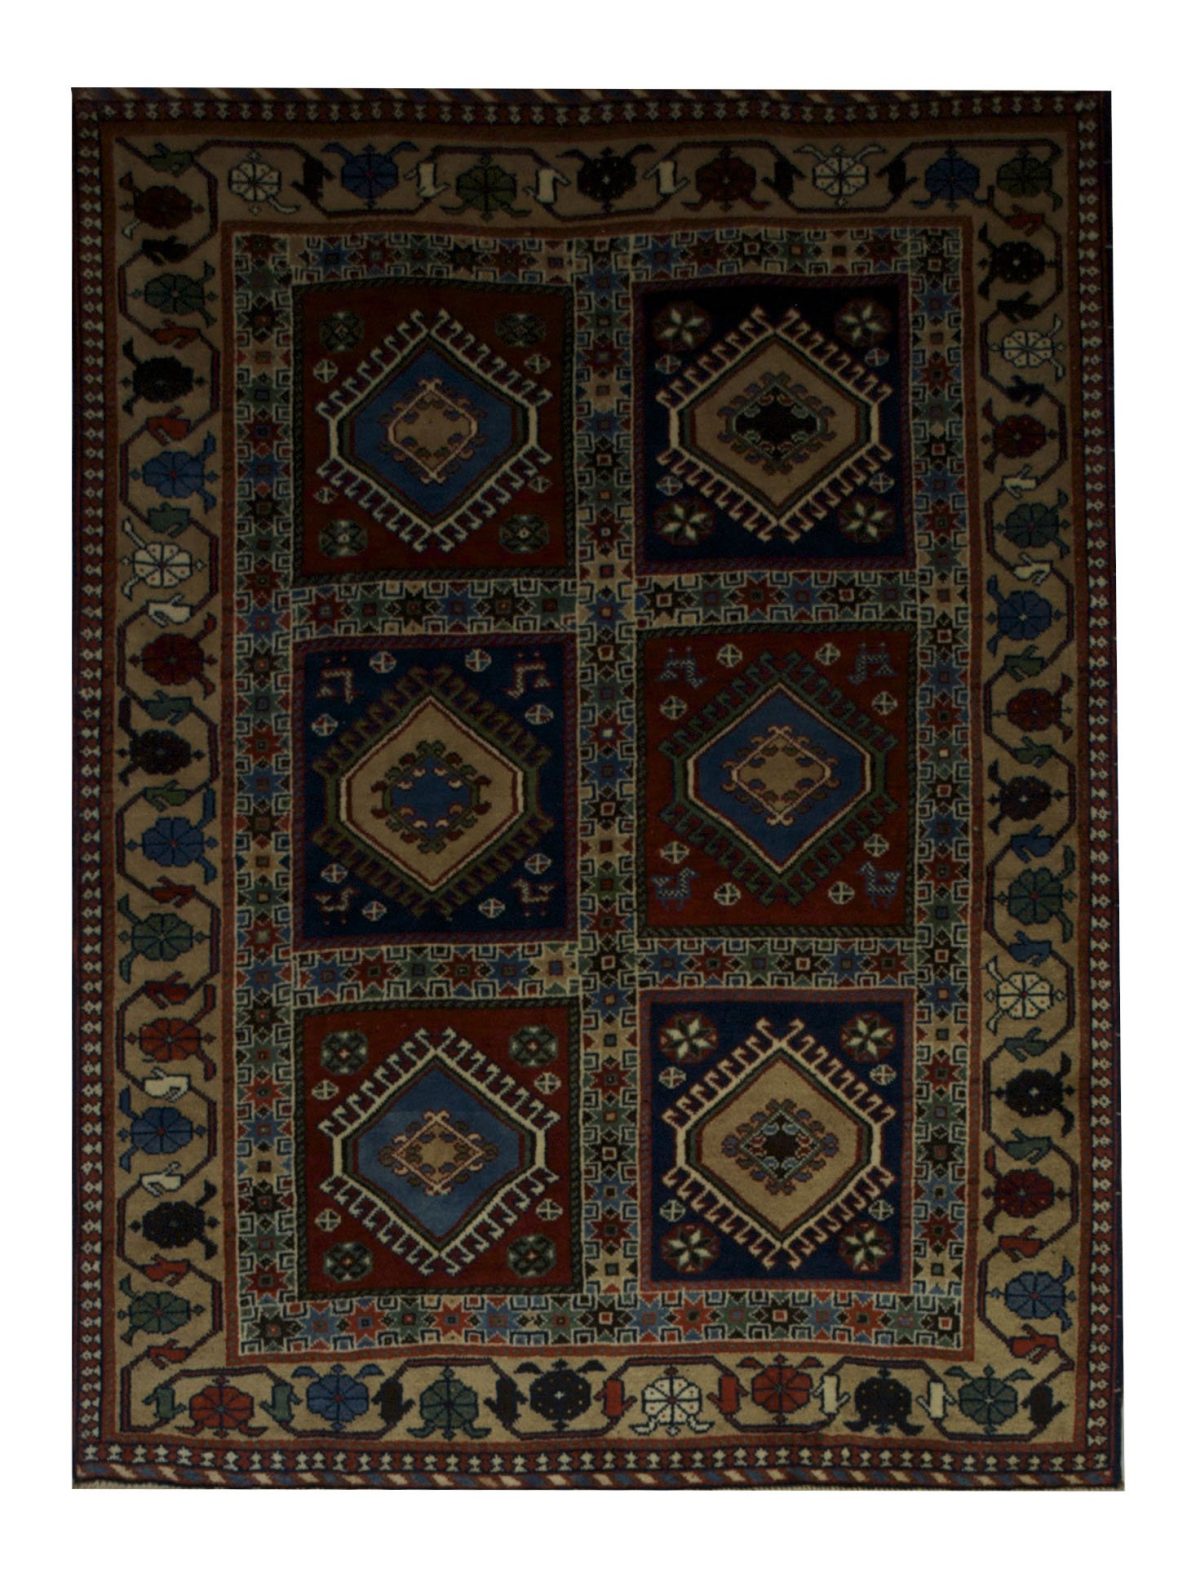 Antique Persian Yallameh 3' 9" x 5' Handmade Wool Area Rug - Shabahang Royal Carpet